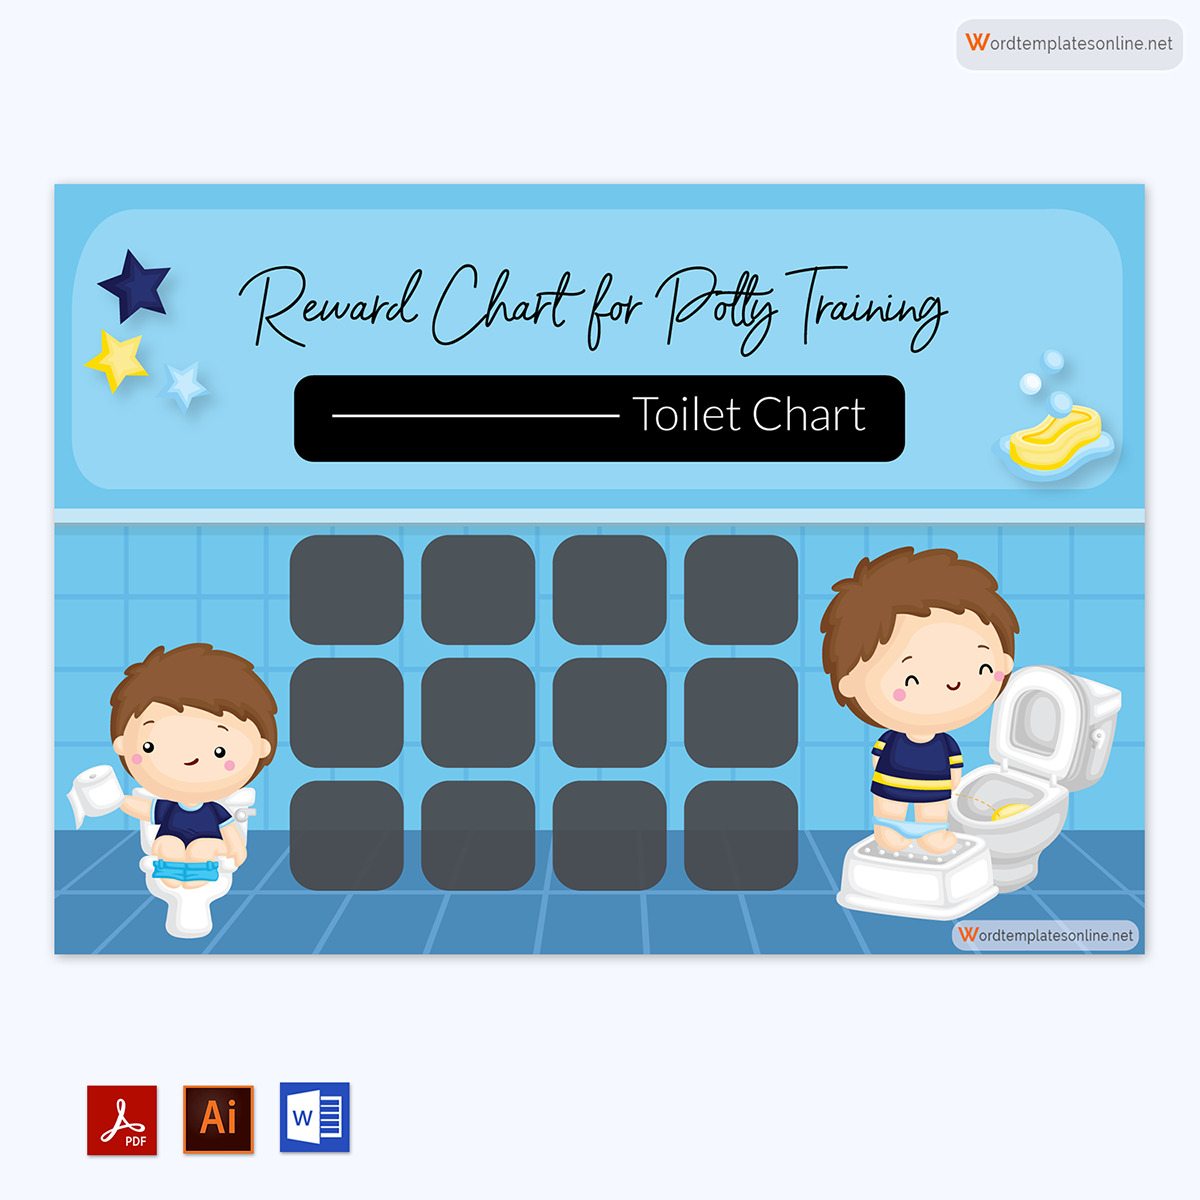 Free Editable Reward Chart for Kids - Printable Example for Toilet Training